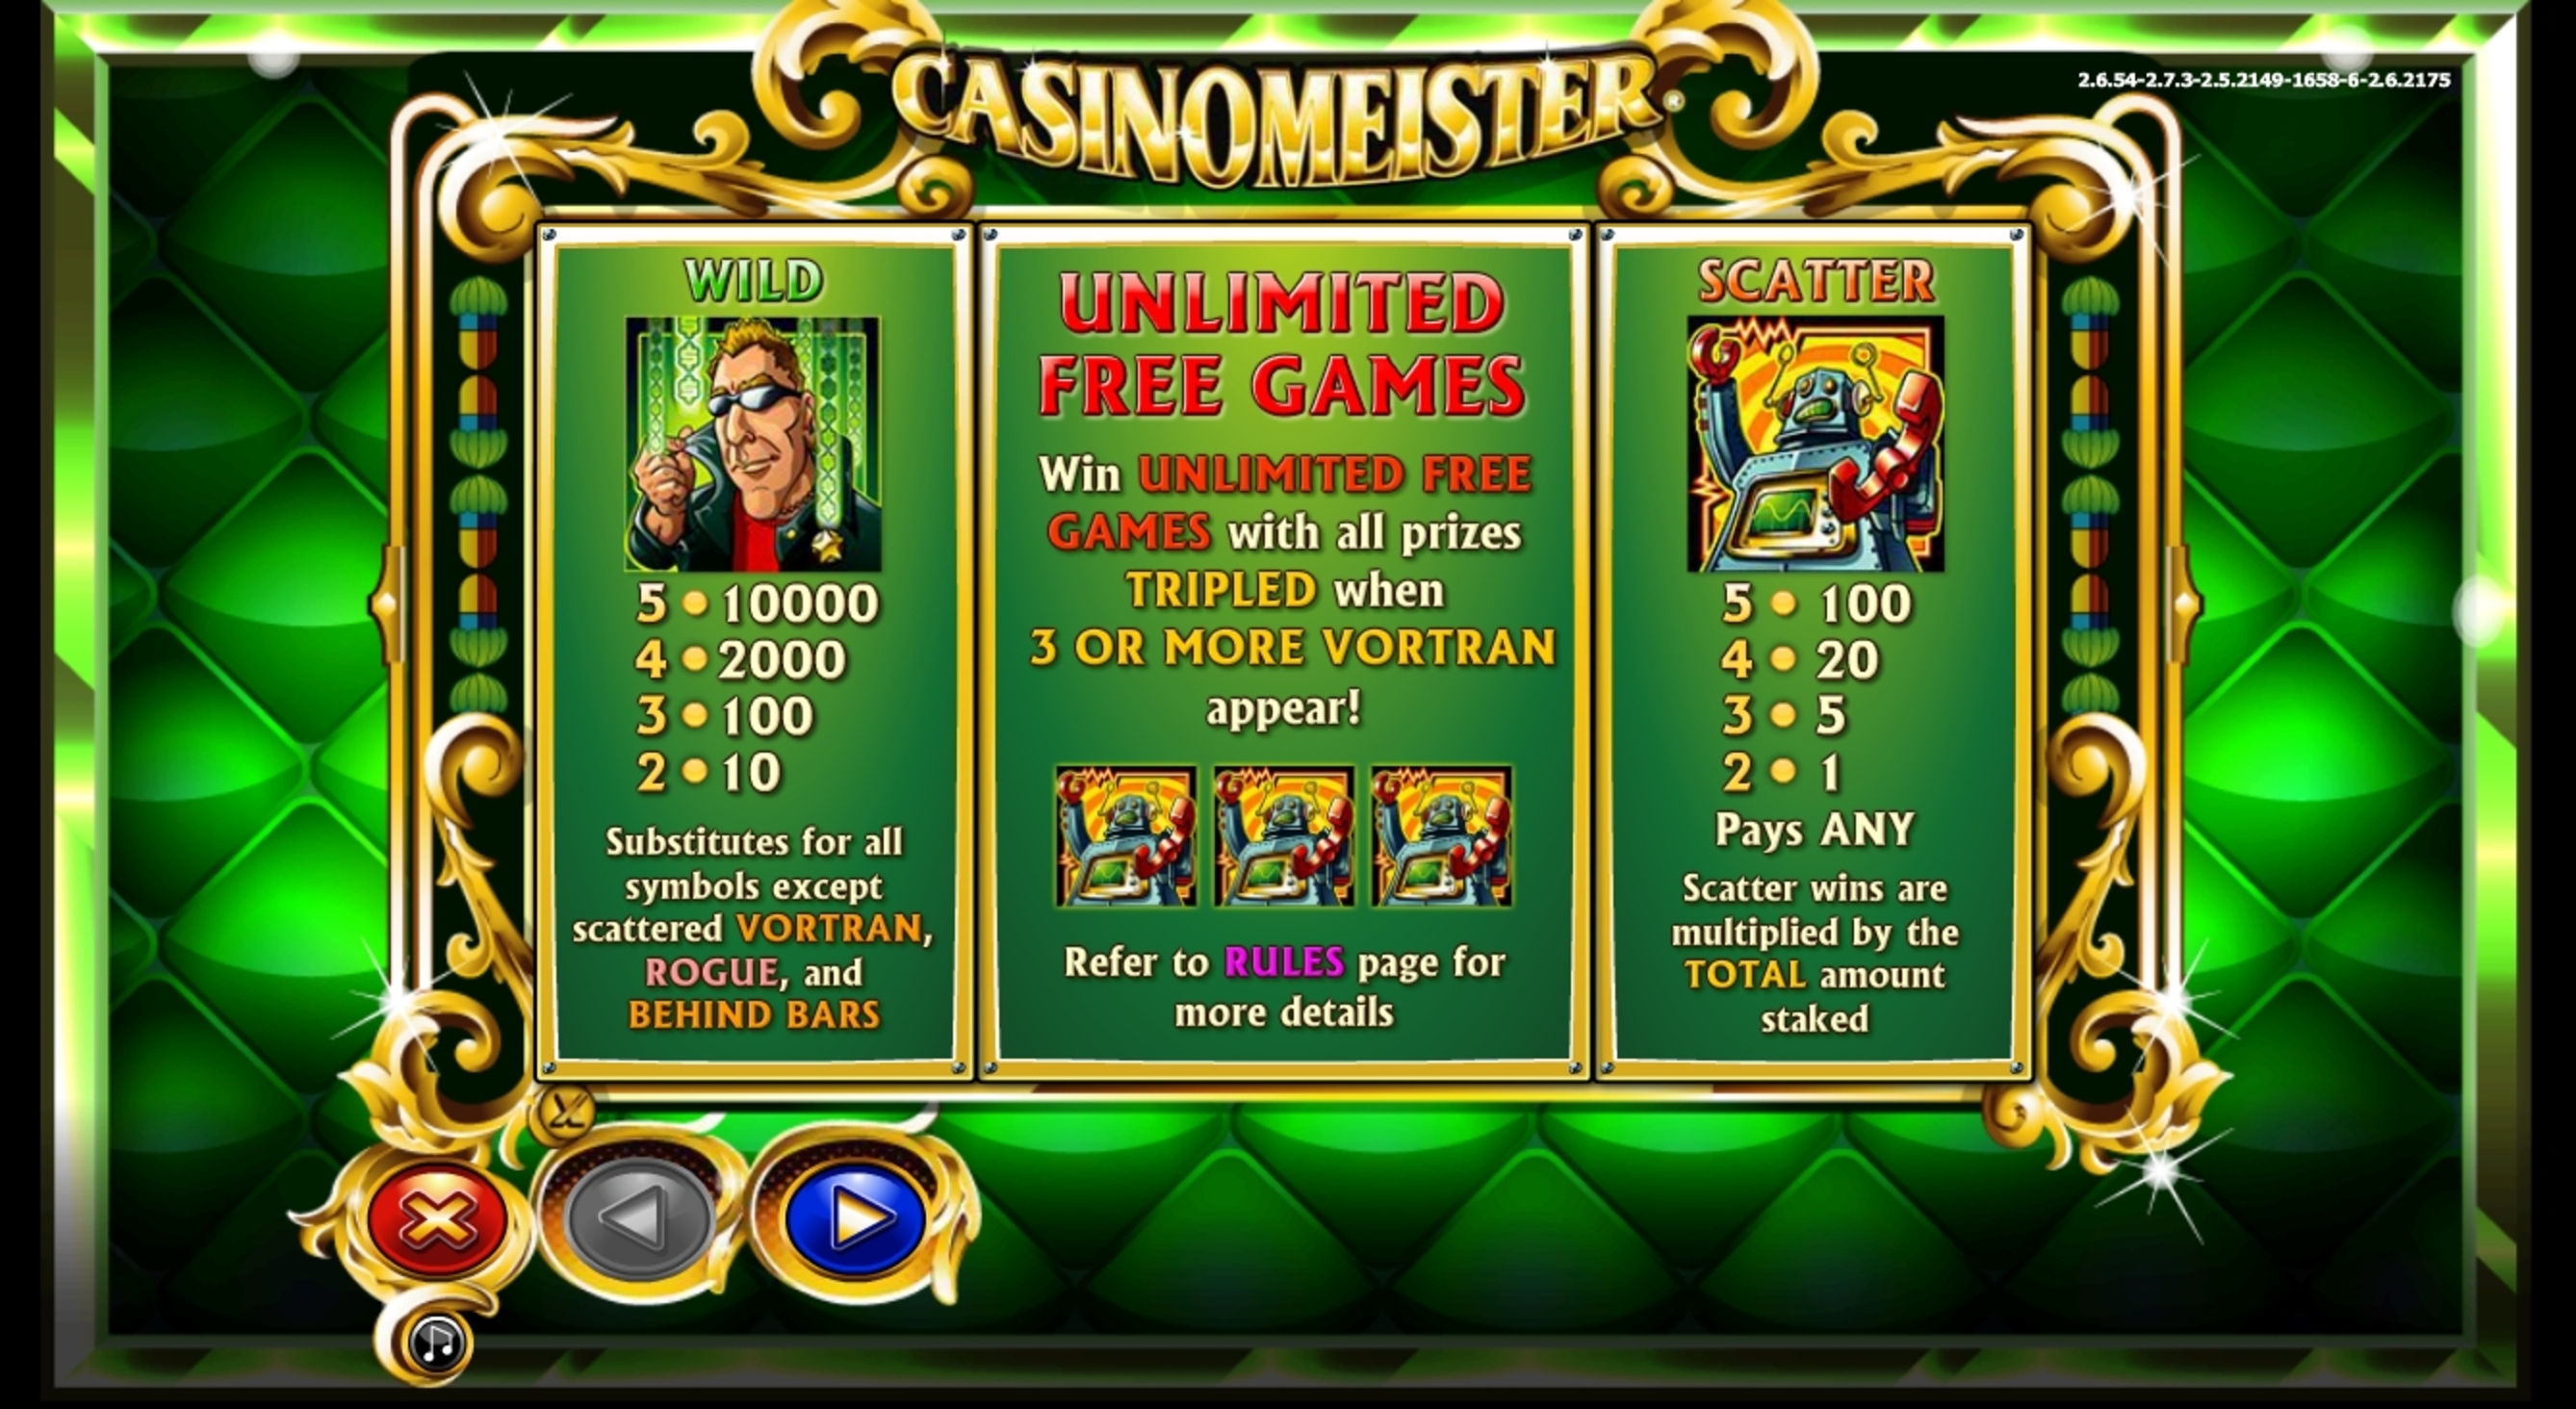 Info of Casinomeister Slot Game by NextGen Gaming